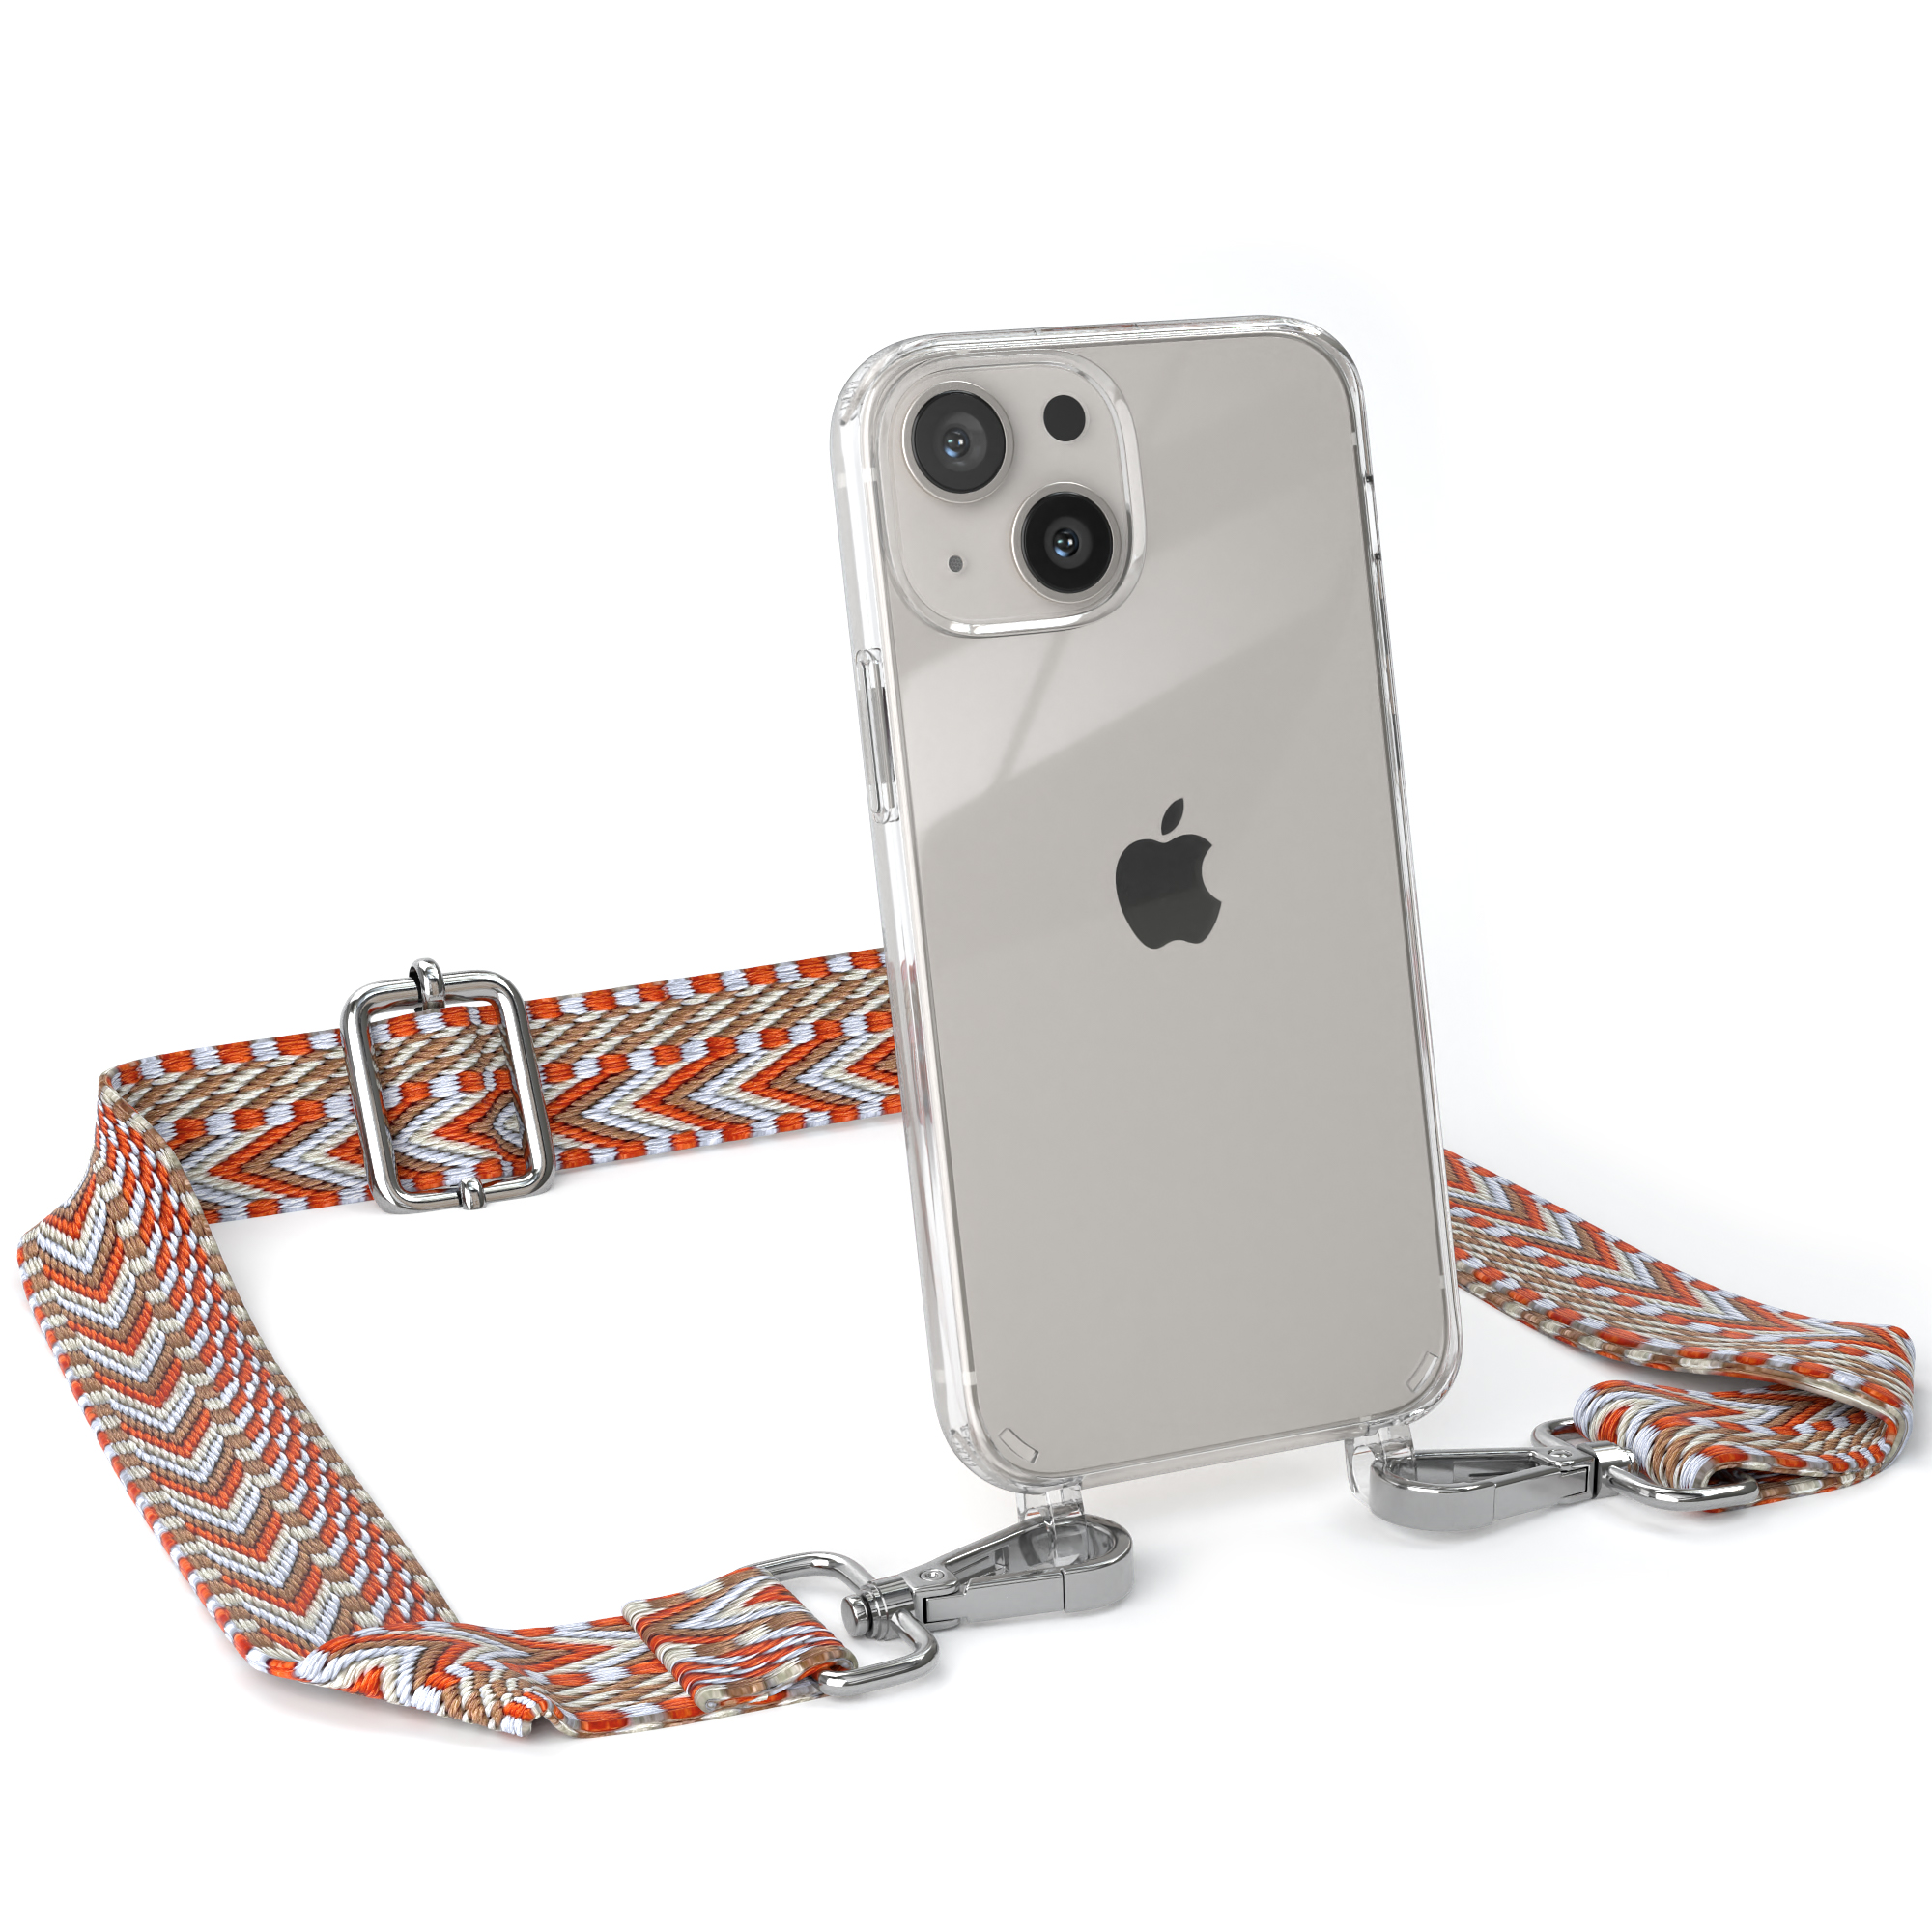 Hellblau Style, Rot Transparente Kordel Mini, 13 / Apple, Boho iPhone Handyhülle Umhängetasche, EAZY CASE mit